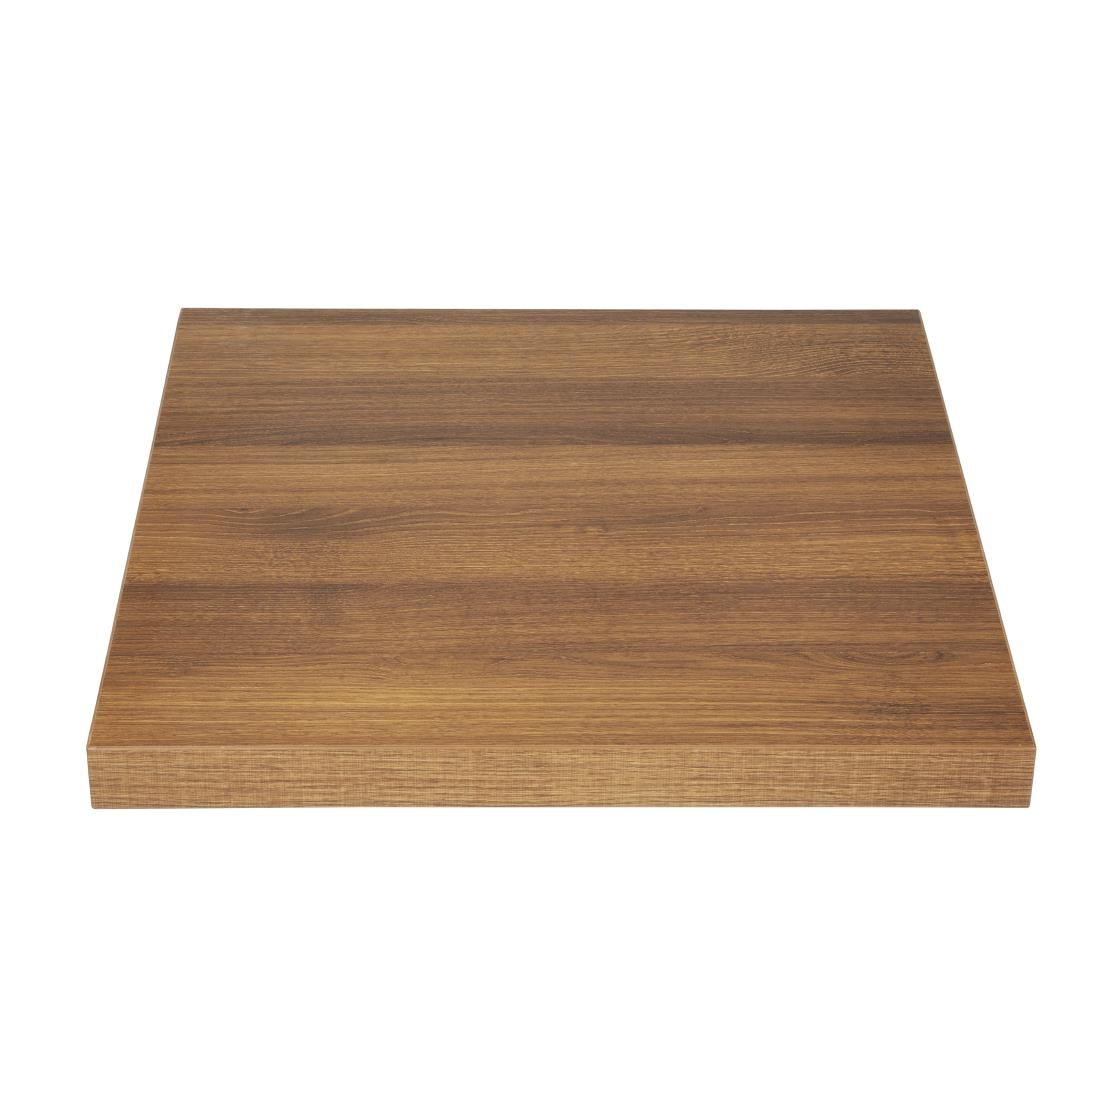 Bolero Pre-drilled Square Table Top Rustic Oak 700mm JD Catering Equipment Solutions Ltd